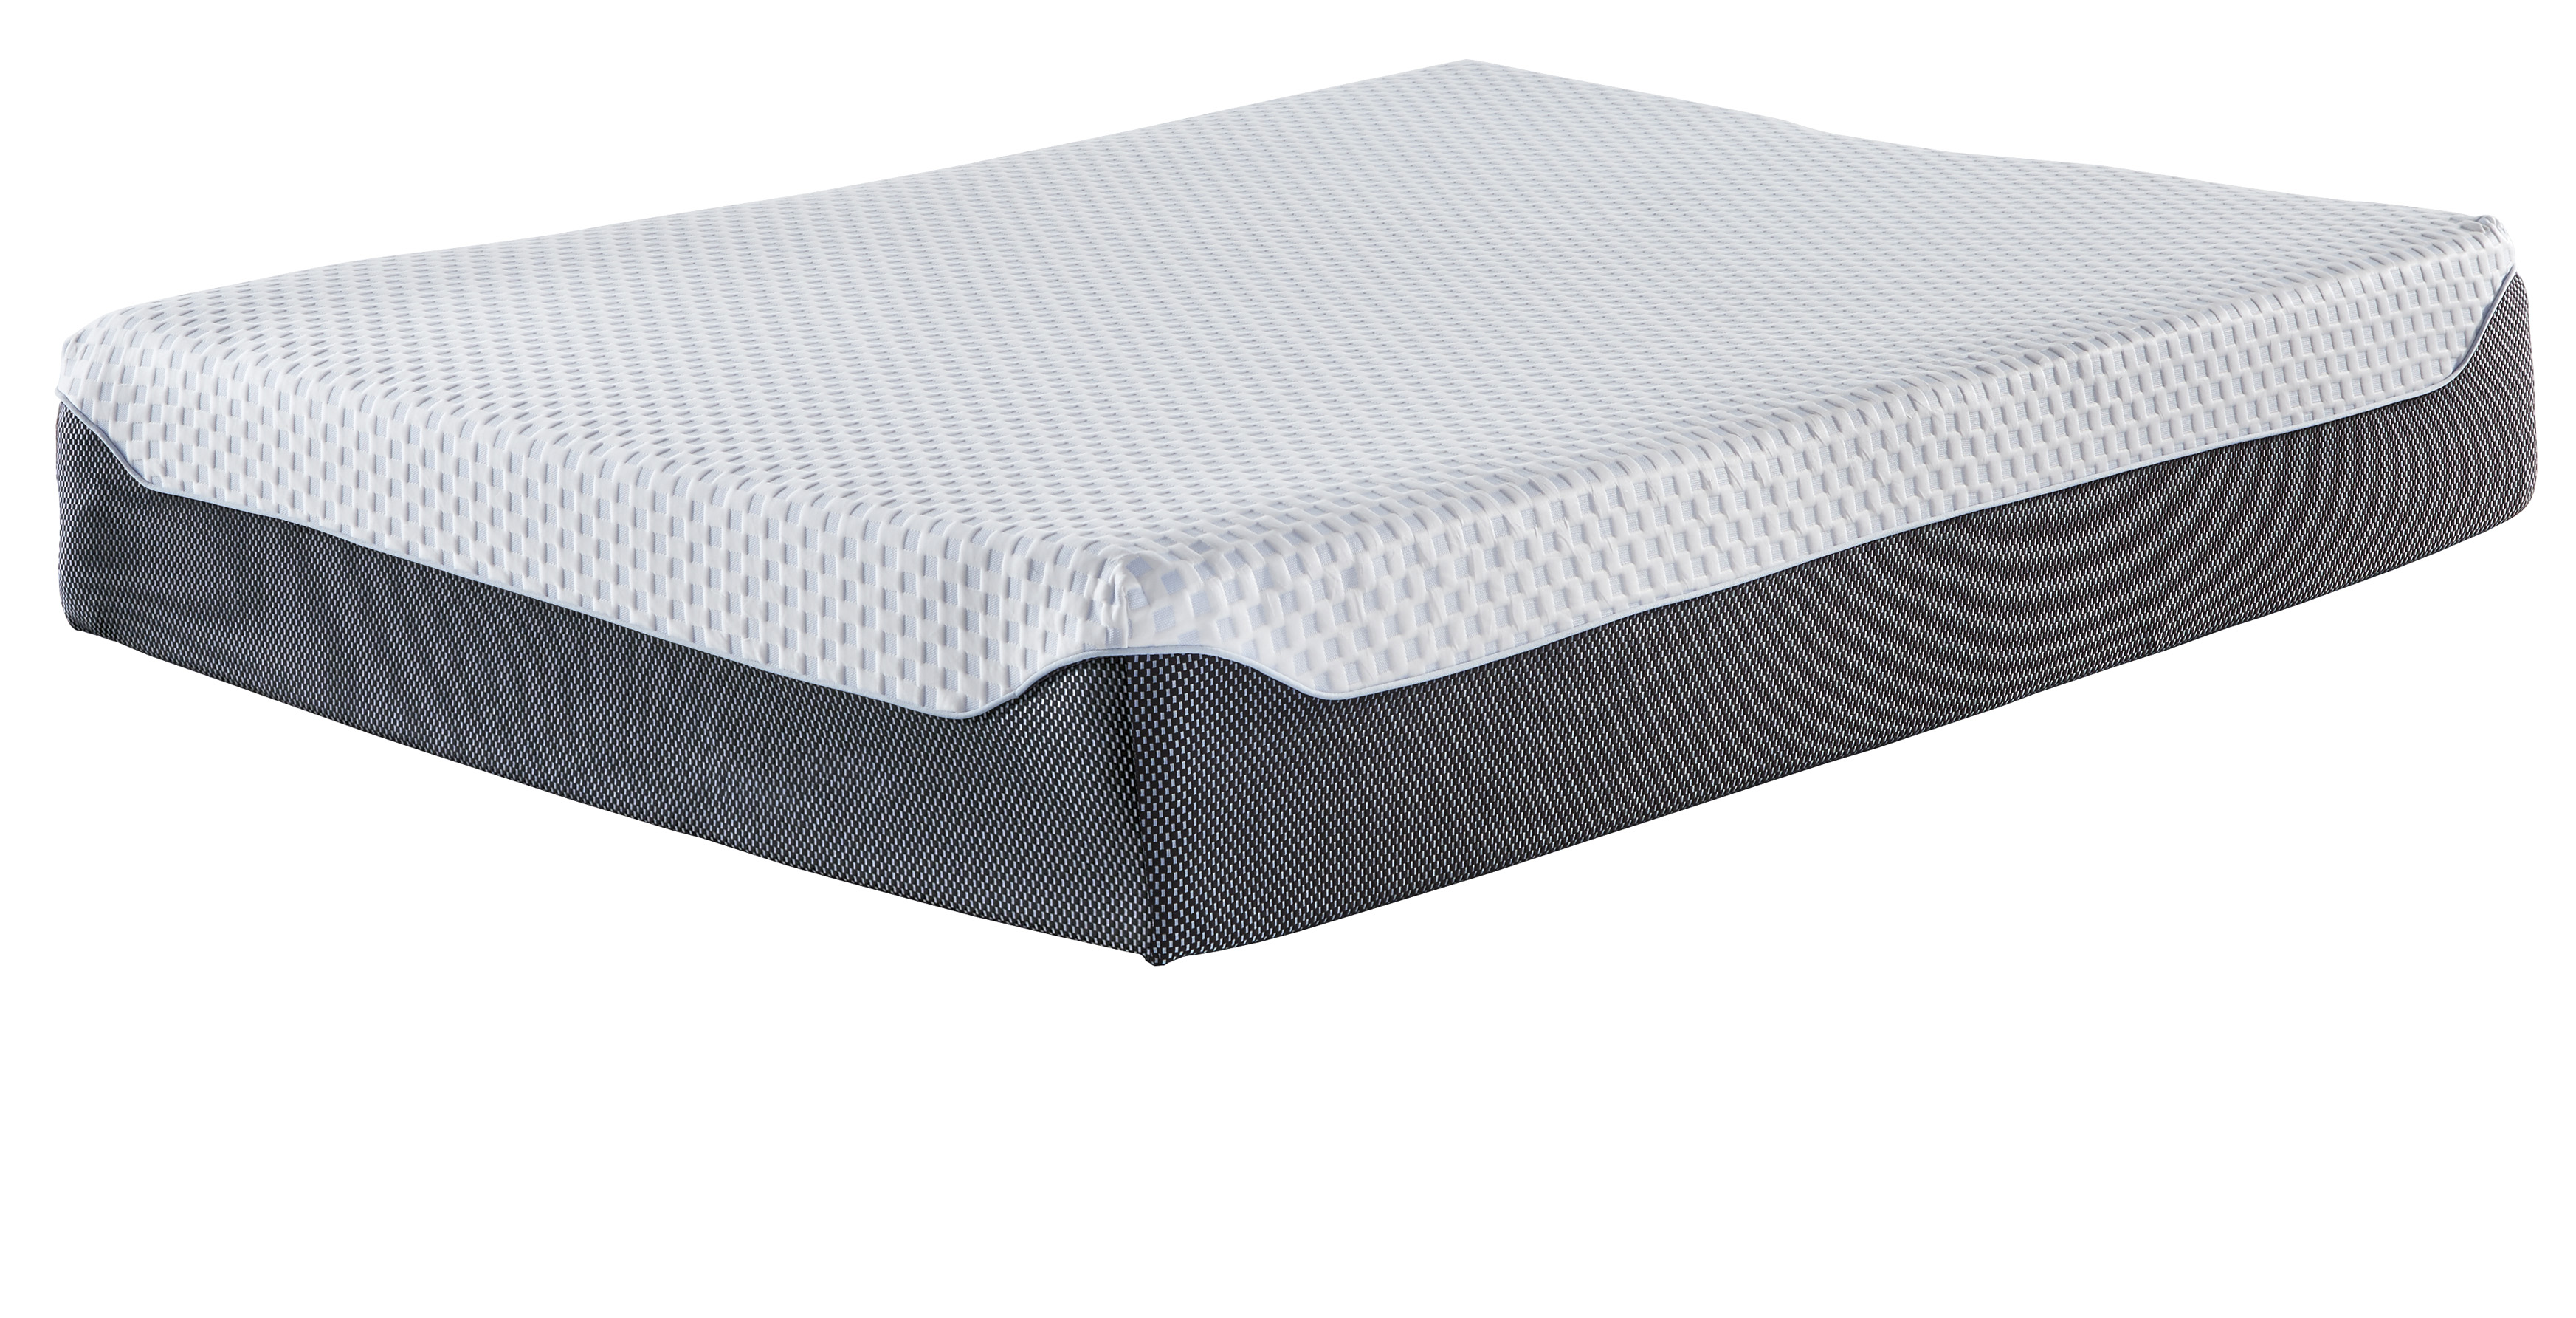 12 inch chime express memory foam mattress reviews